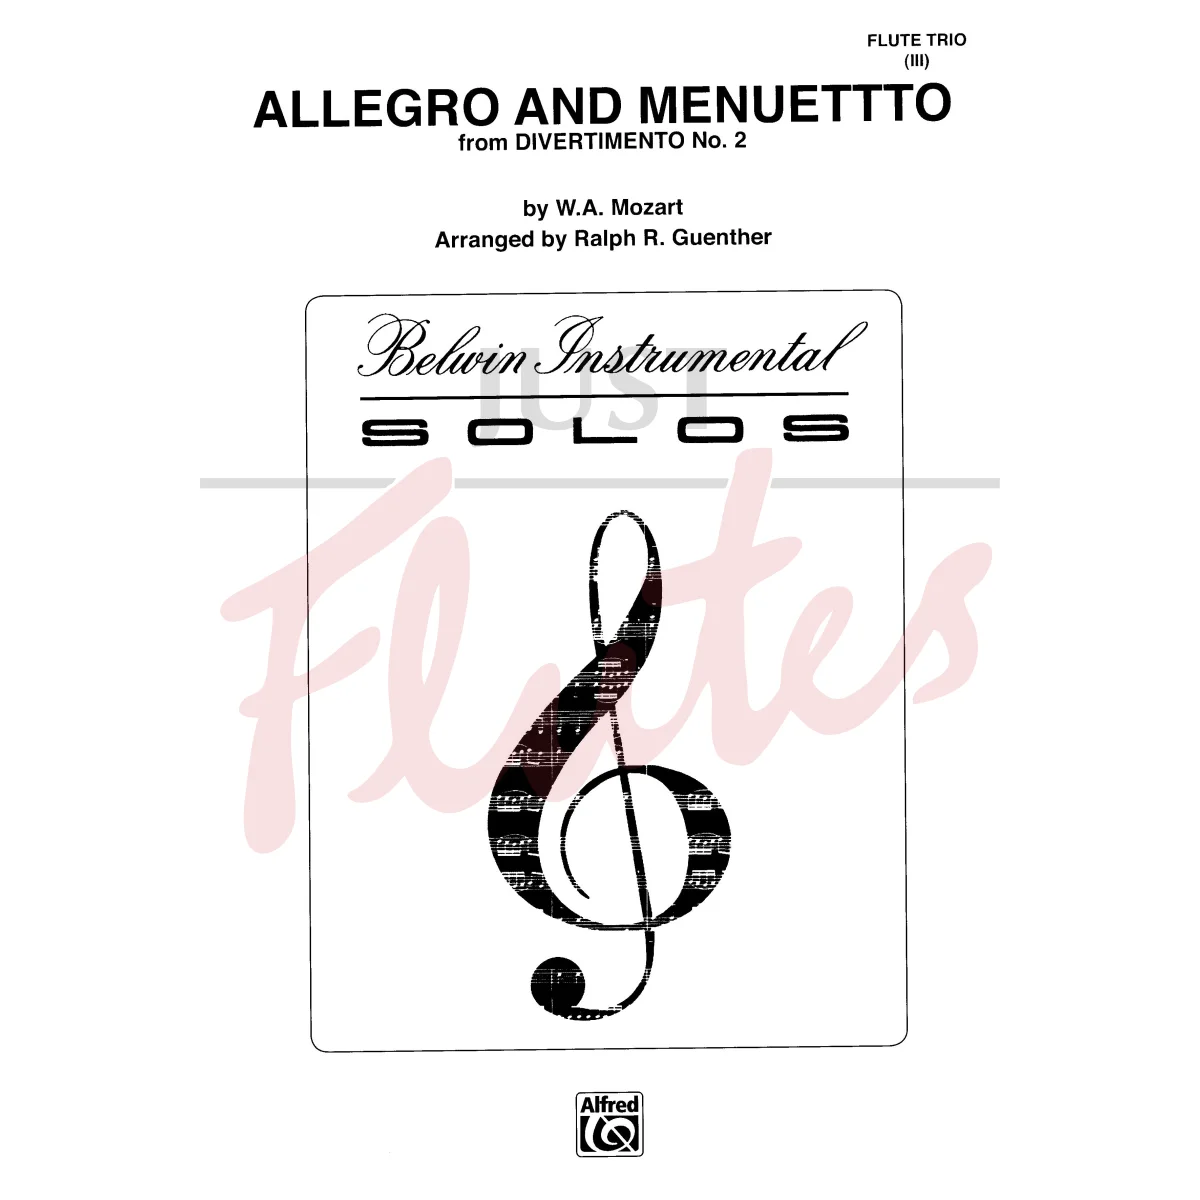 Allegro and Menuetto from Divertimento No.2 for Three Flutes